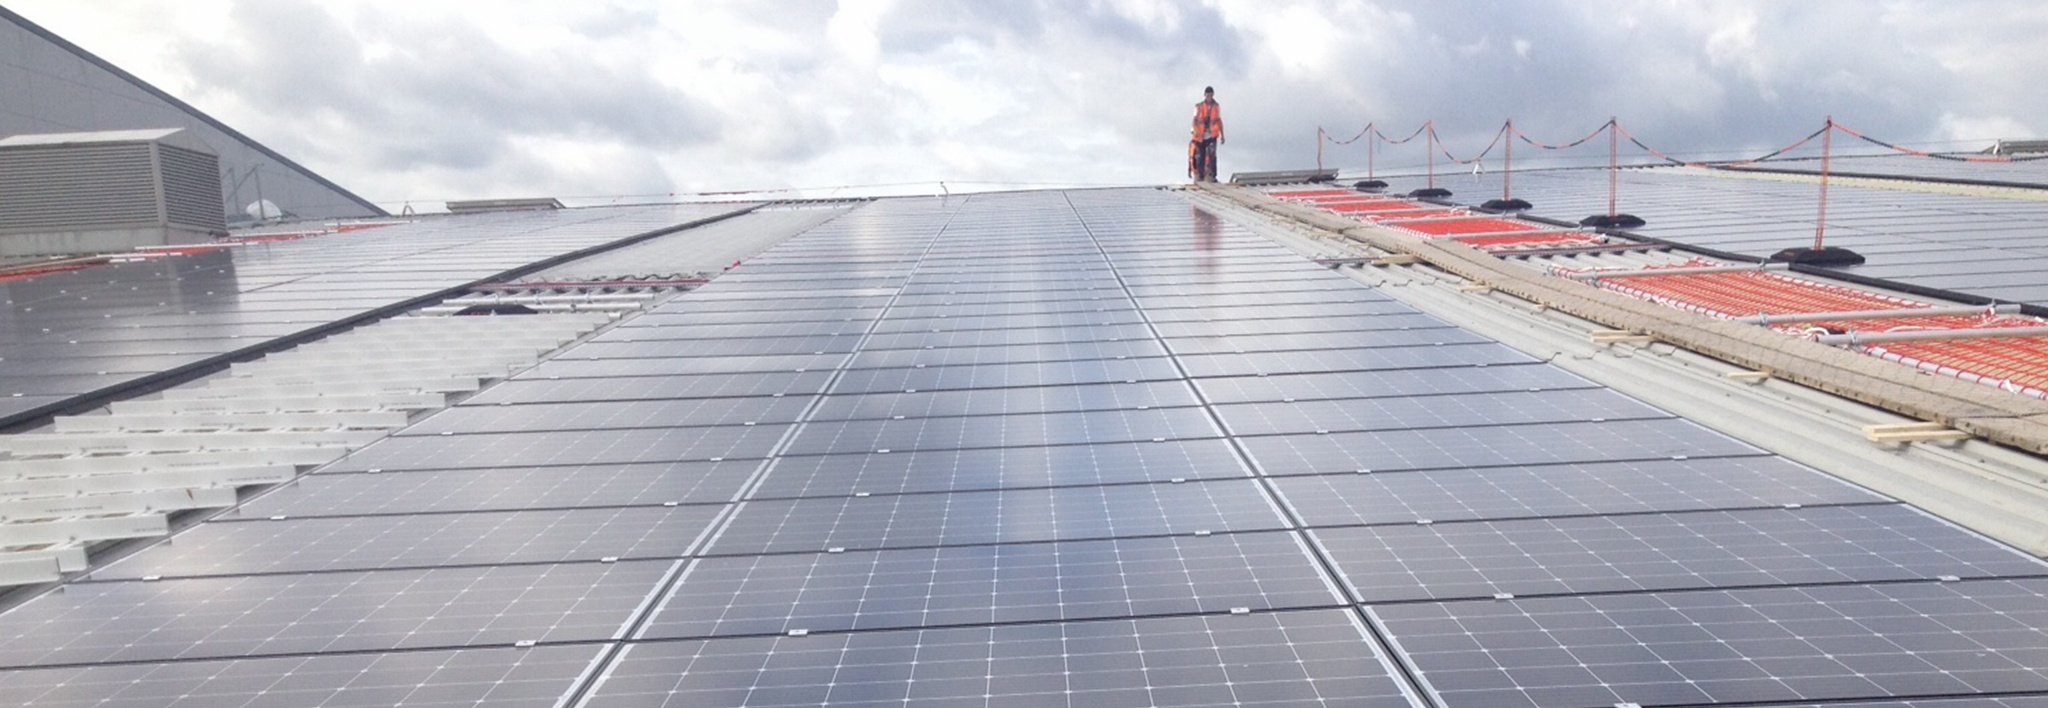 Clenergy Rooftop PV-ezRack Trapezoidal 3.8MW Solar Project in Shropshire U.K